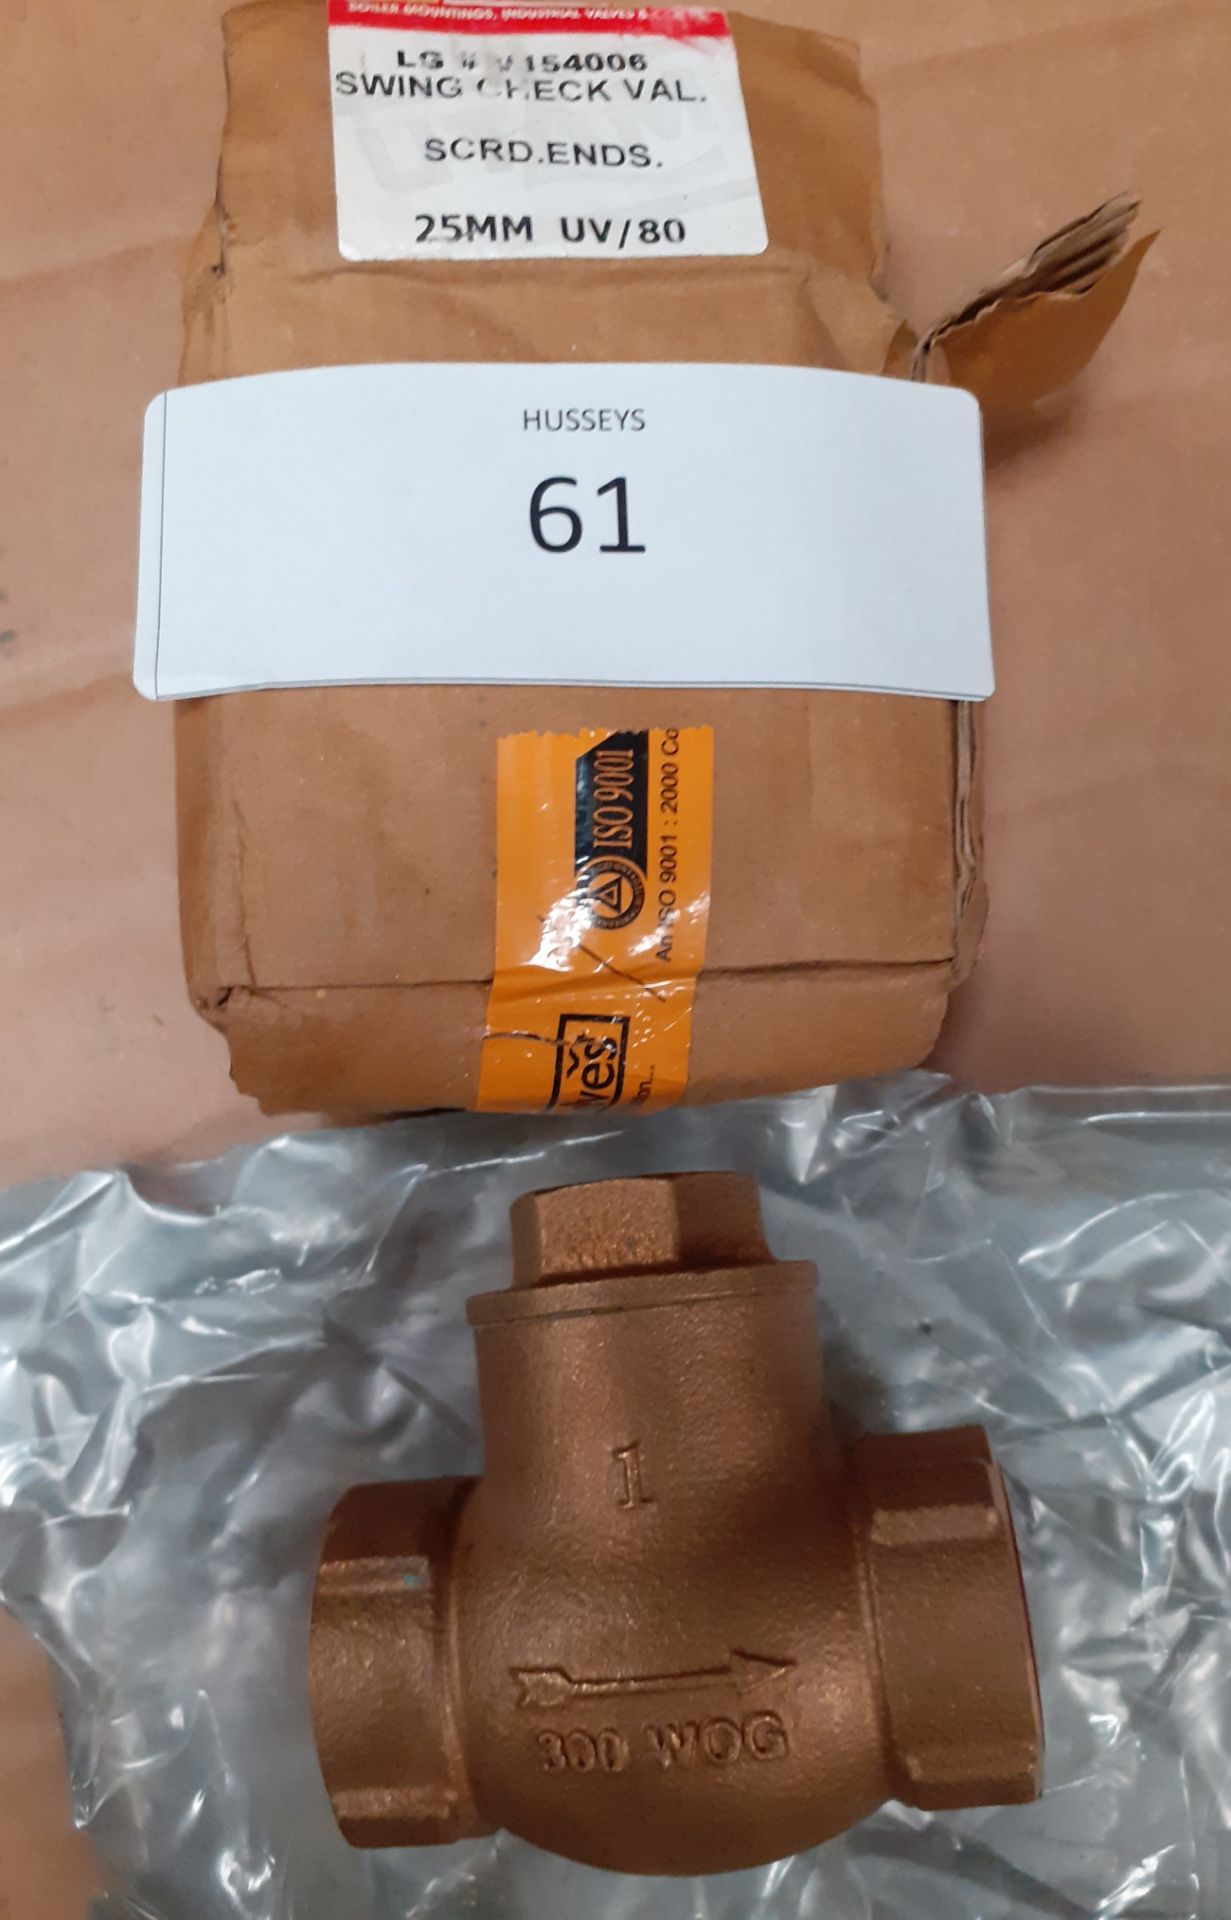 Swing check valve - bronze 1" BSP 25mm UV/80 LG# V154006 UTAM (Qnty: 1)